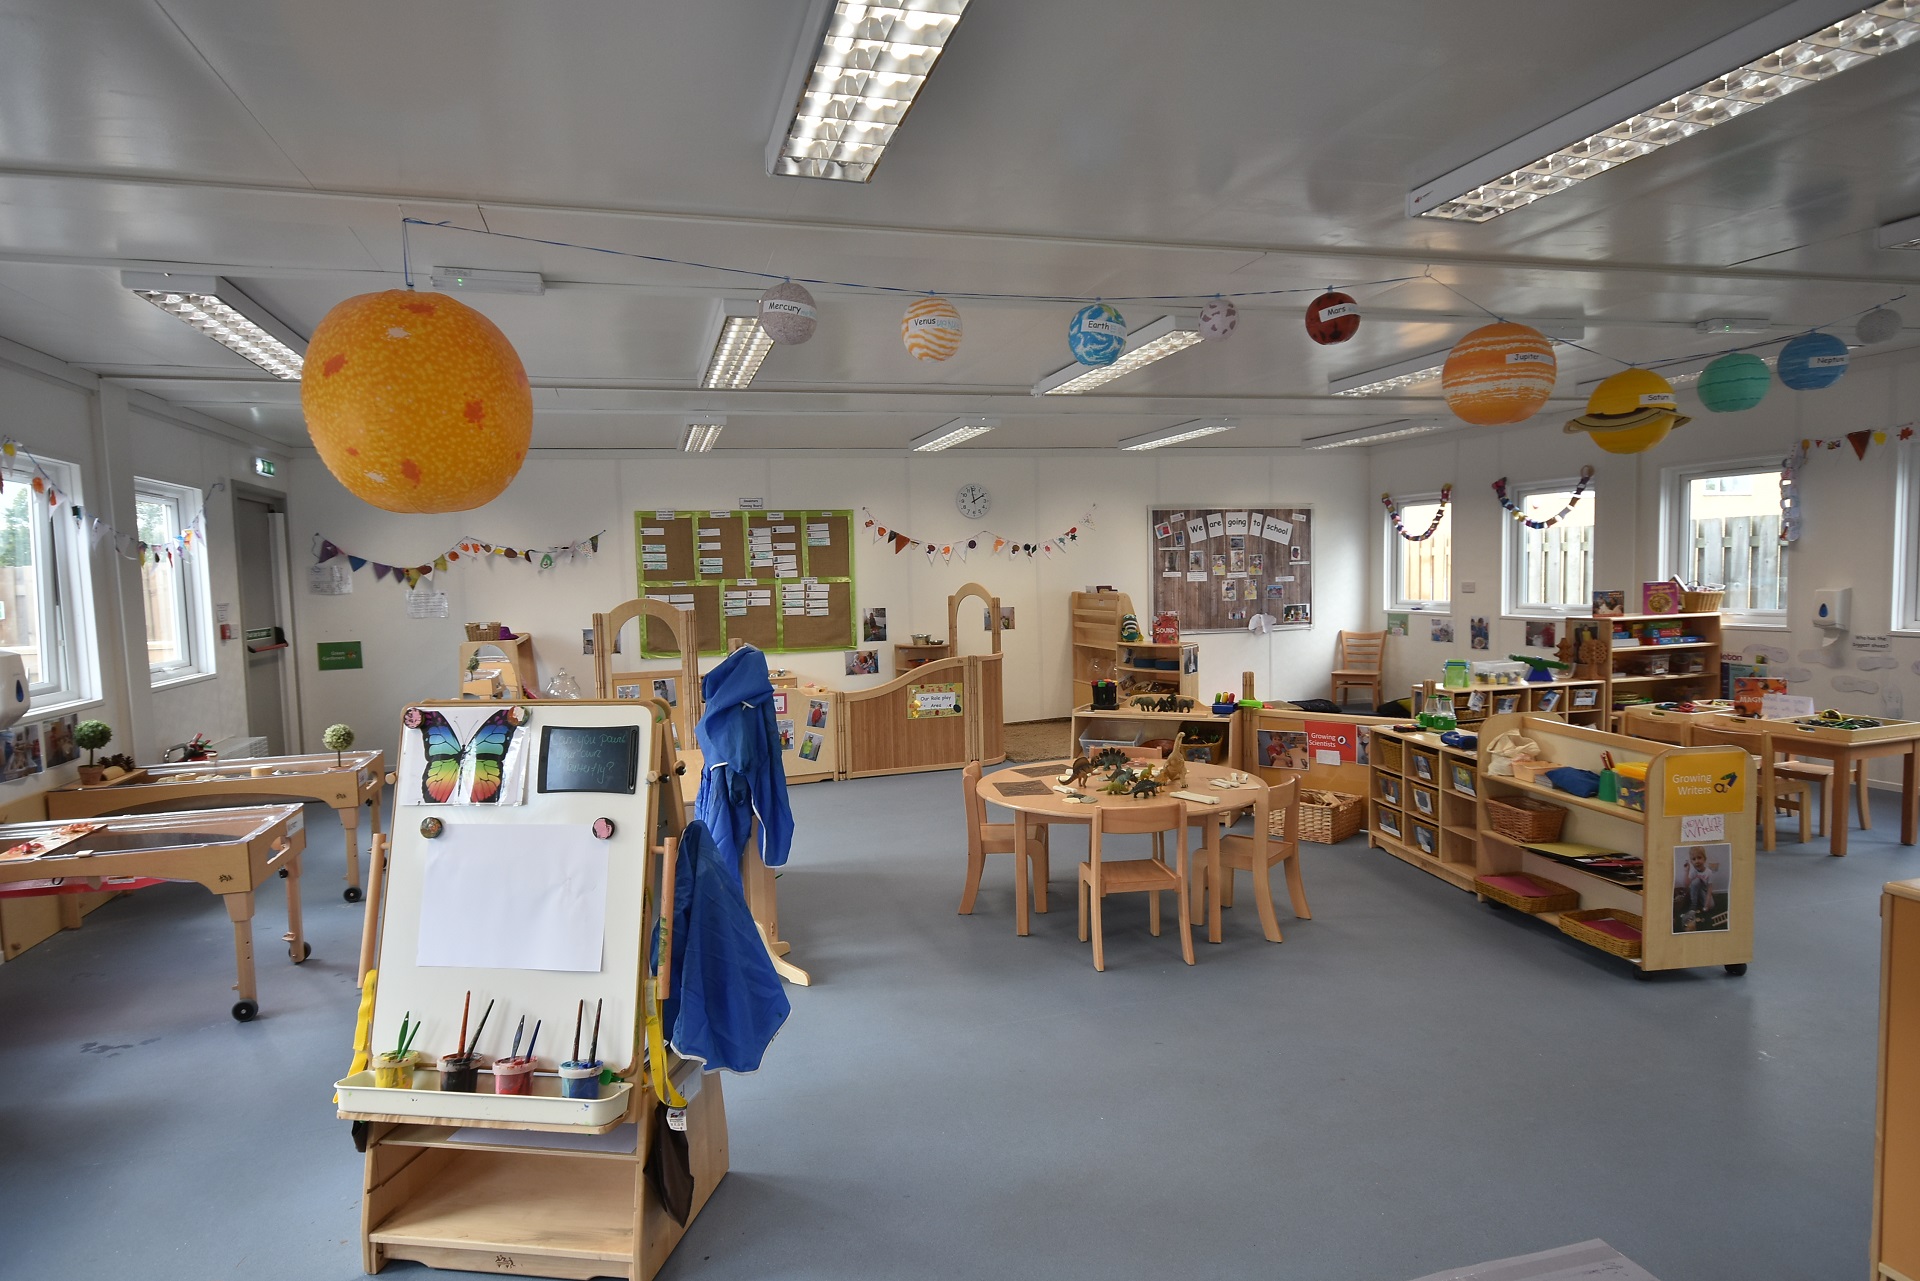 Bright Horizons Guildford Day Nursery and Preschool nursery room